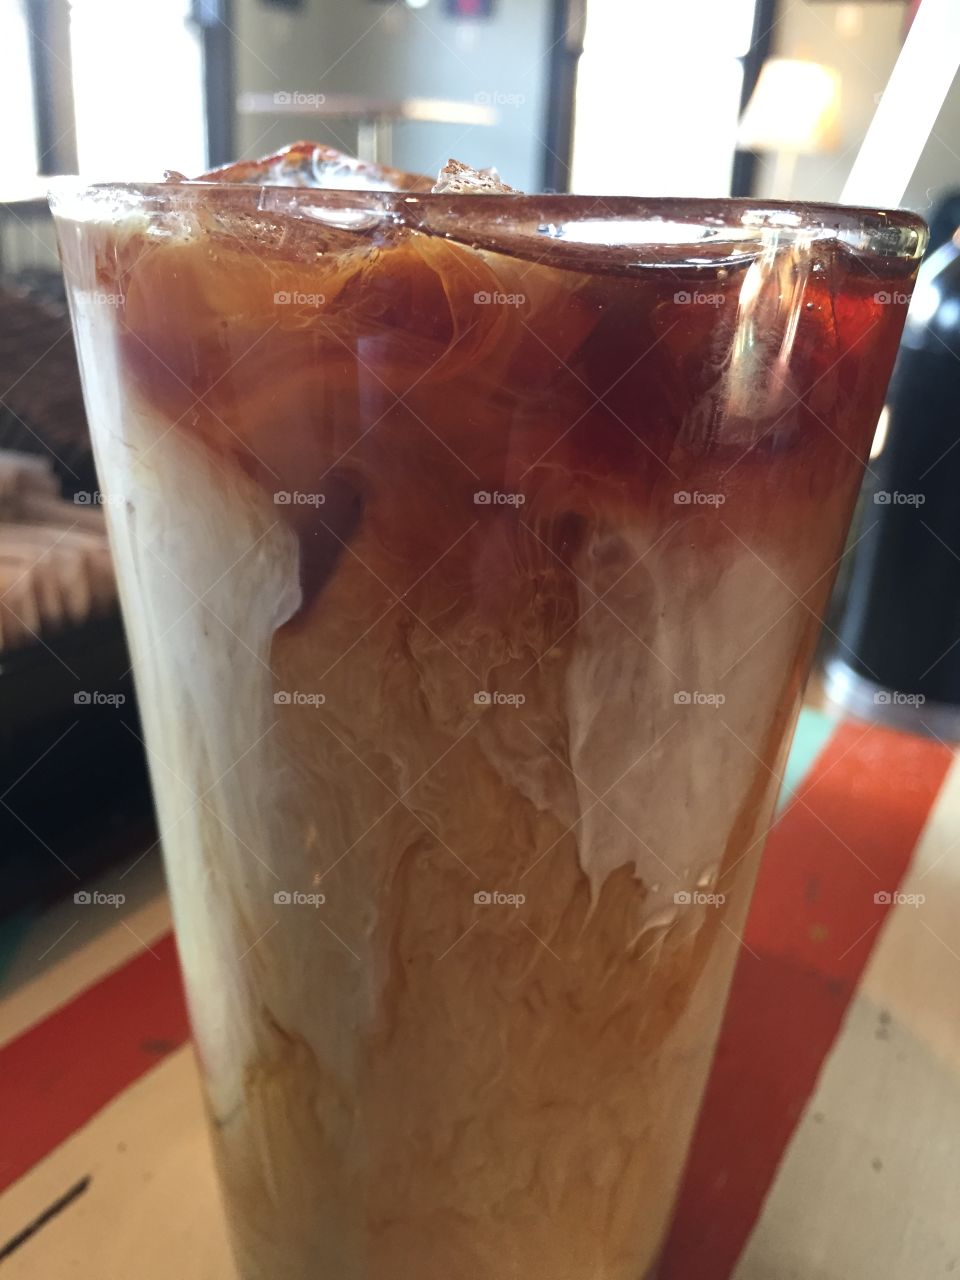 Cream sinking into iced coffee.